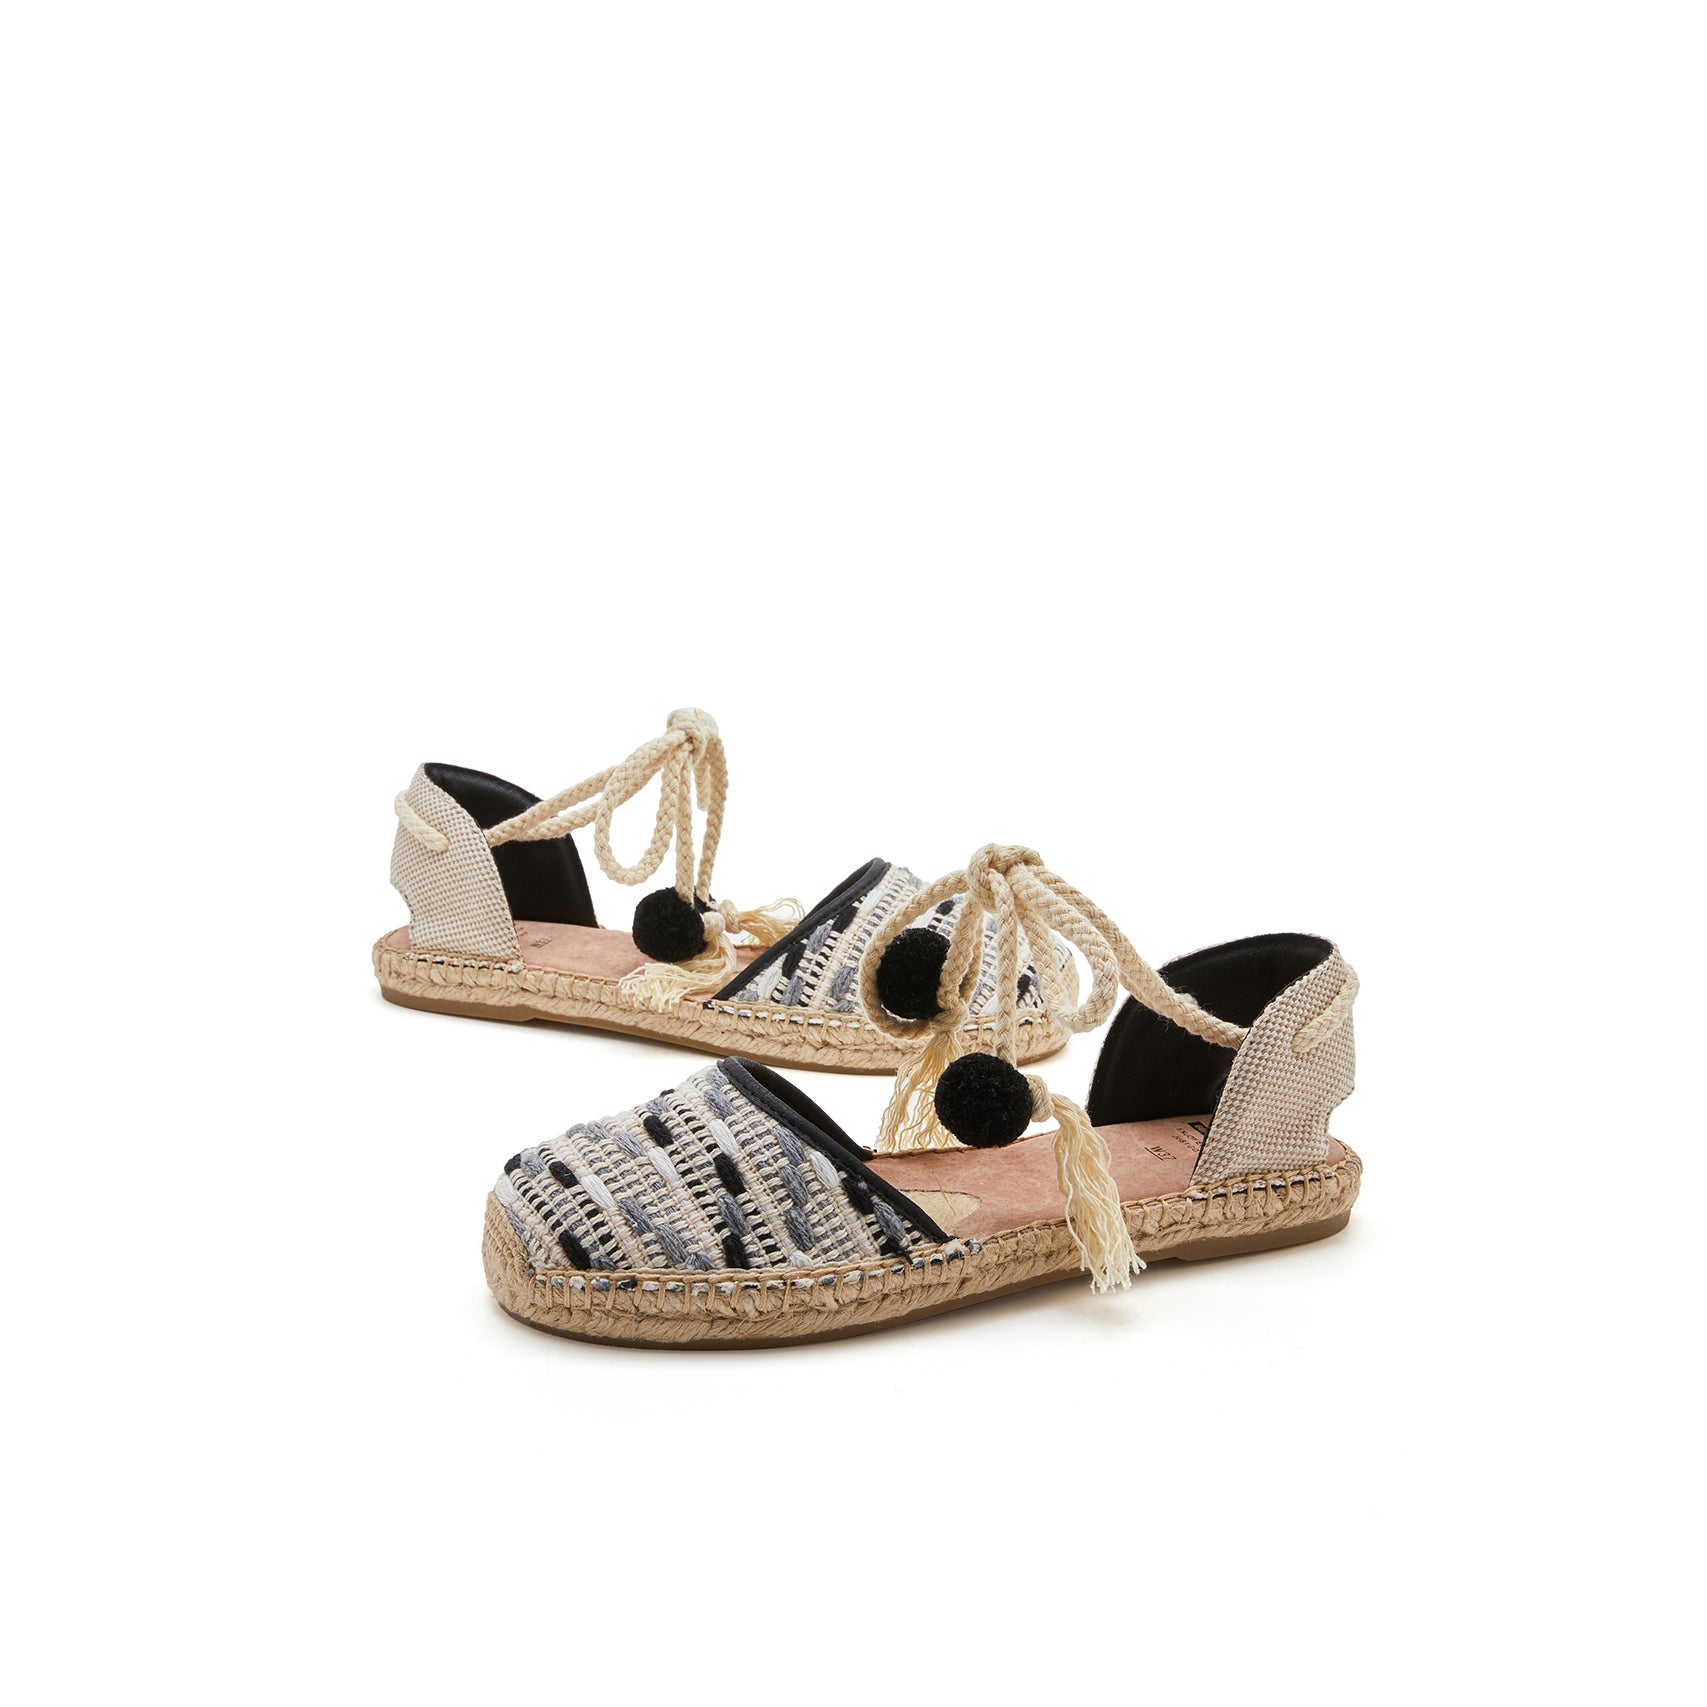 JOY&MARIO Handmade Women’s Slip-On Espadrille Fabric Loafers Flats Sandal in Black-05361W